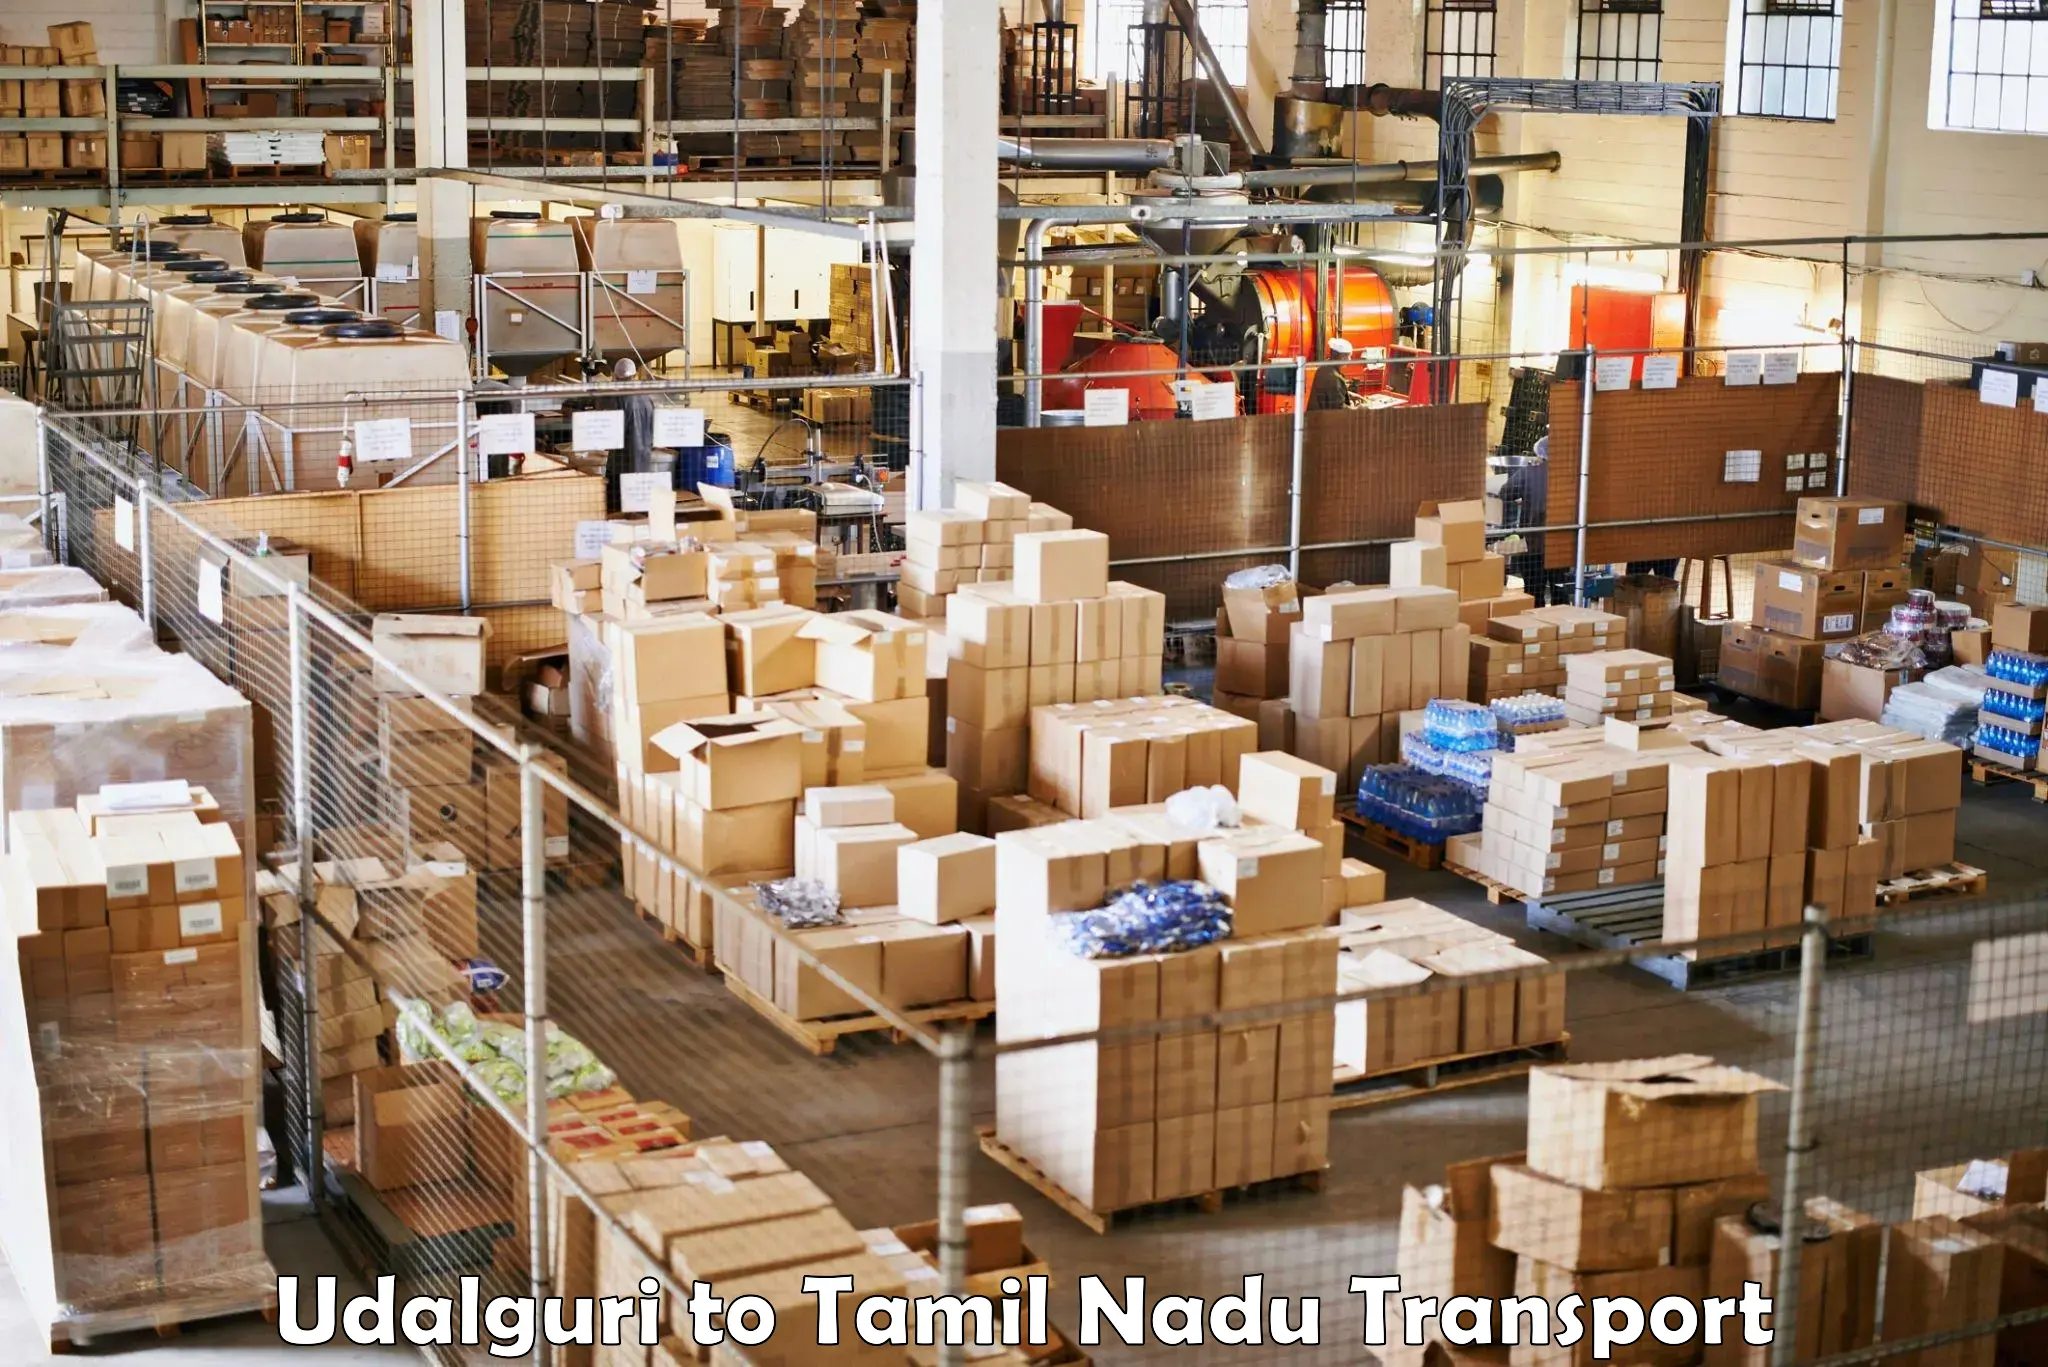 Delivery service Udalguri to Kumbakonam